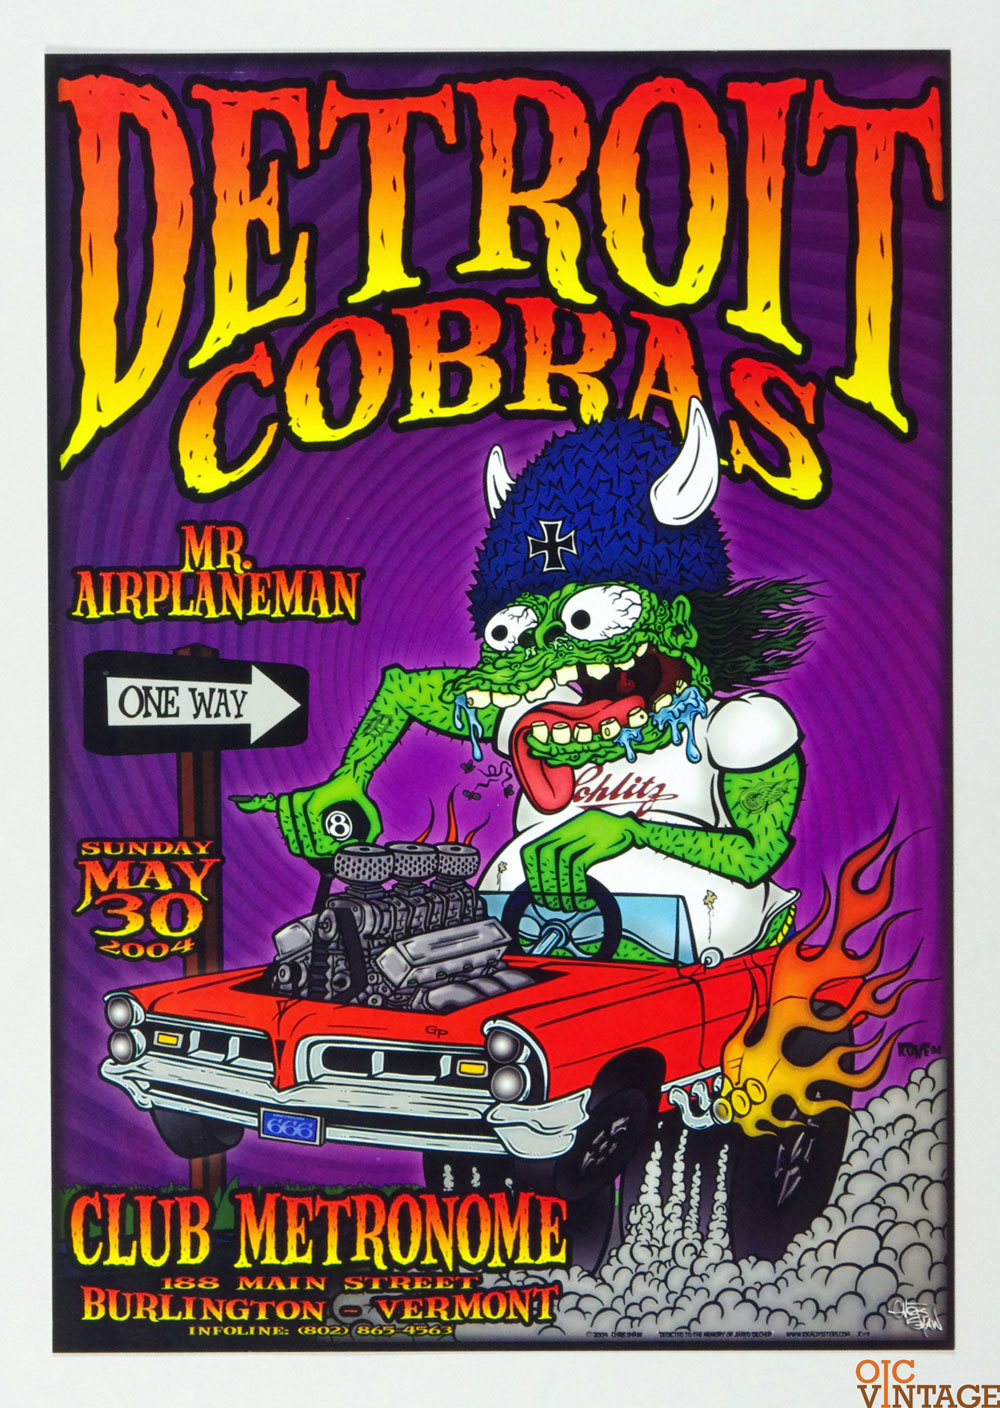 Detroit Cobras Poster 2004 May 30 Club Metronome Burlington